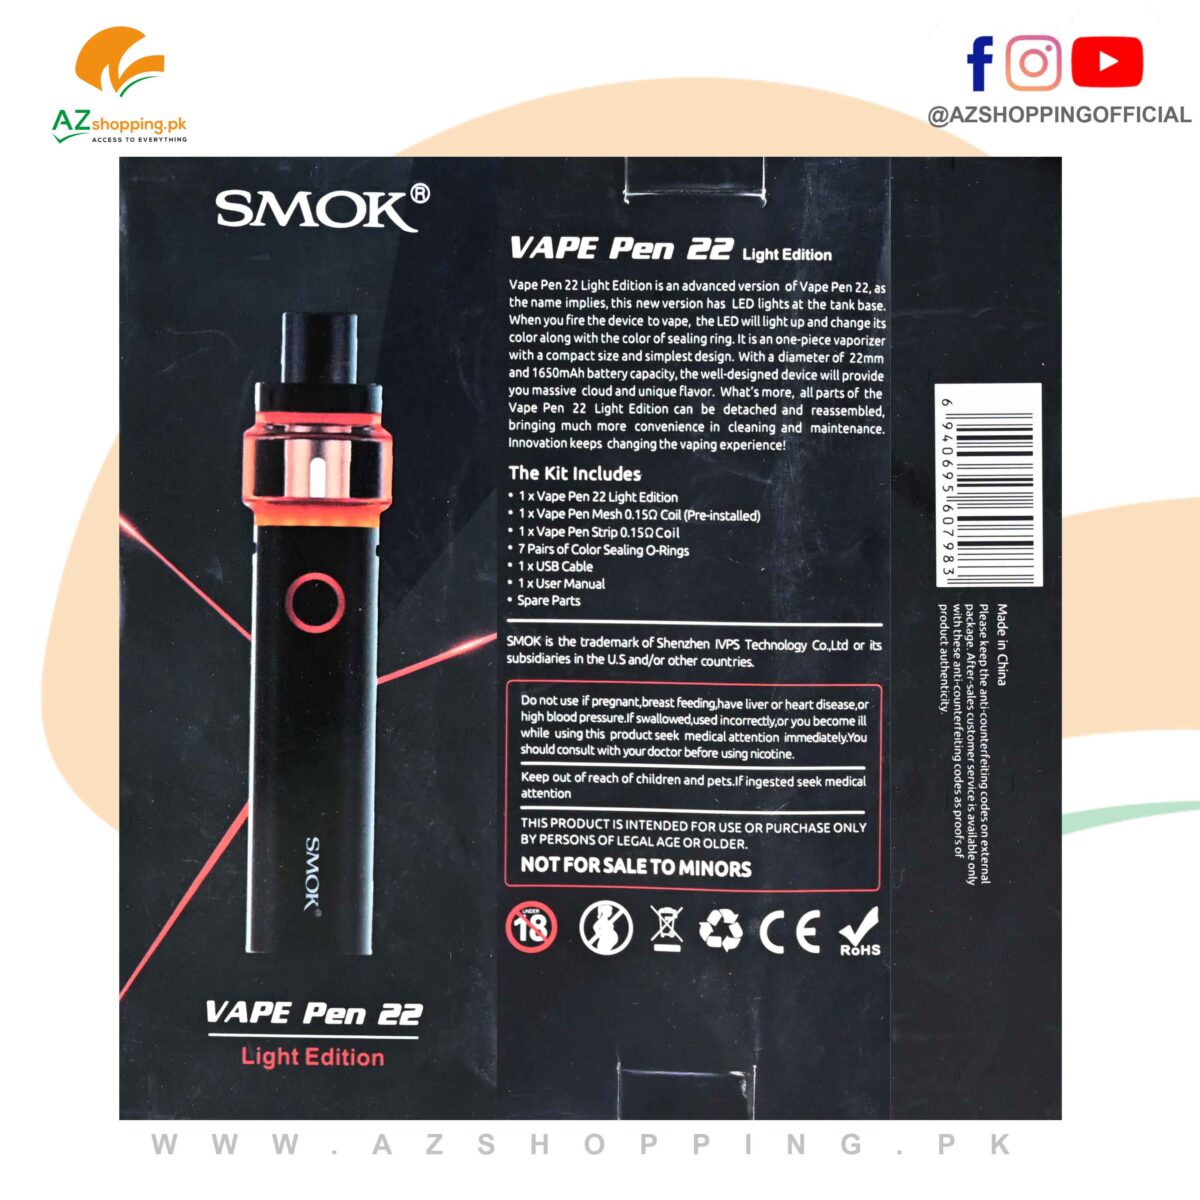 Smok – Vape Pen 22 Light Edition with 1650mAh Battery & 2ml Juice Capacity